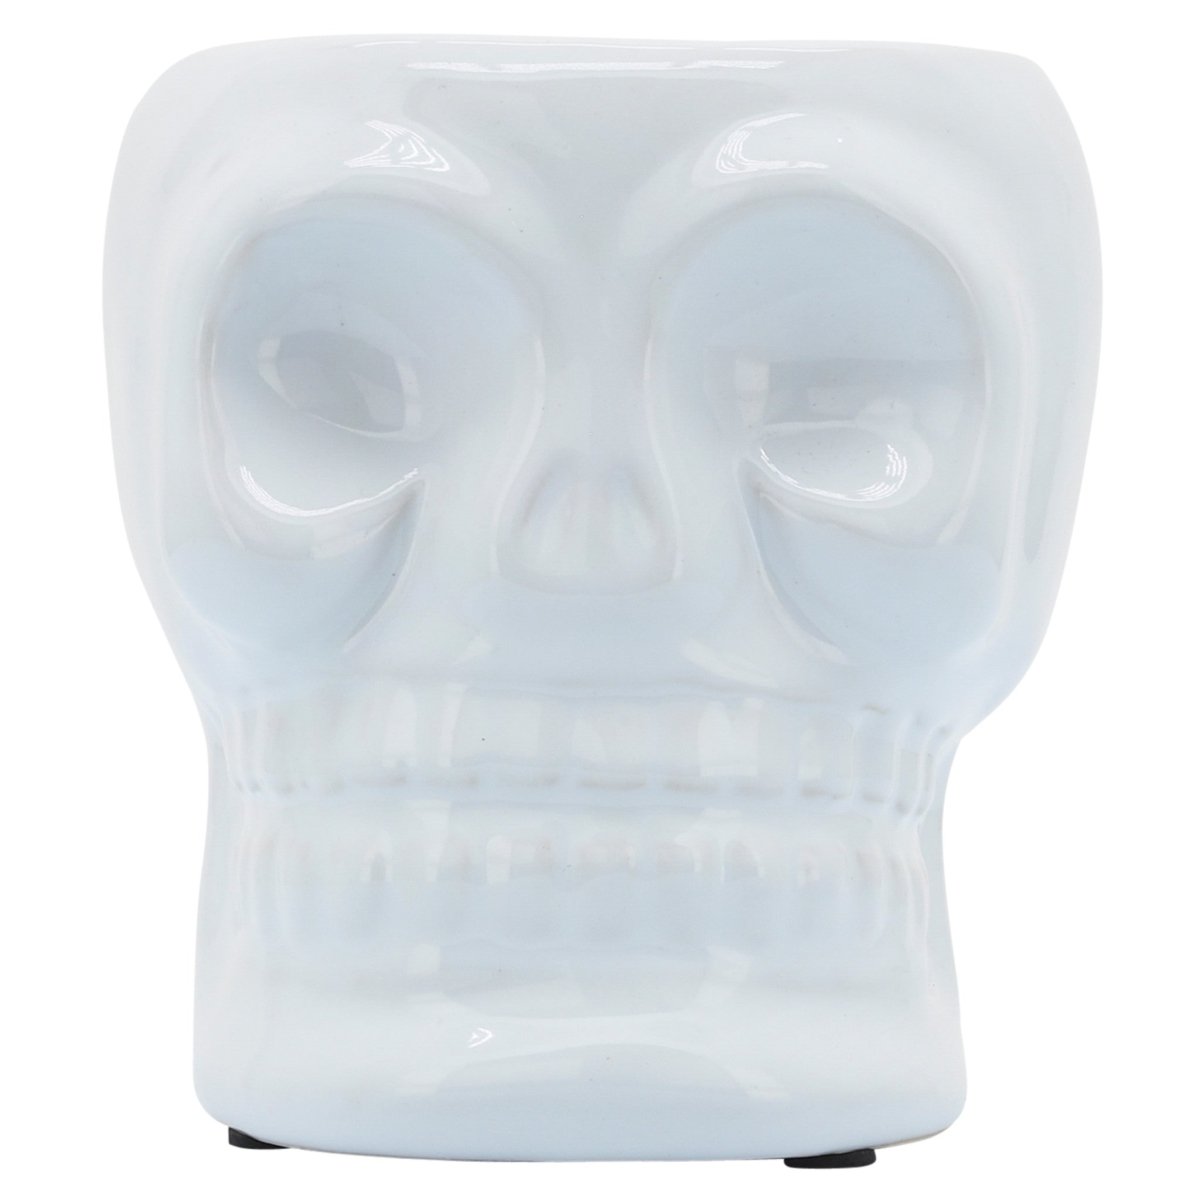 Sagebrook Home Decorative White Ceramic Skull Vase with Glossy Finish, 5" - lily & onyx